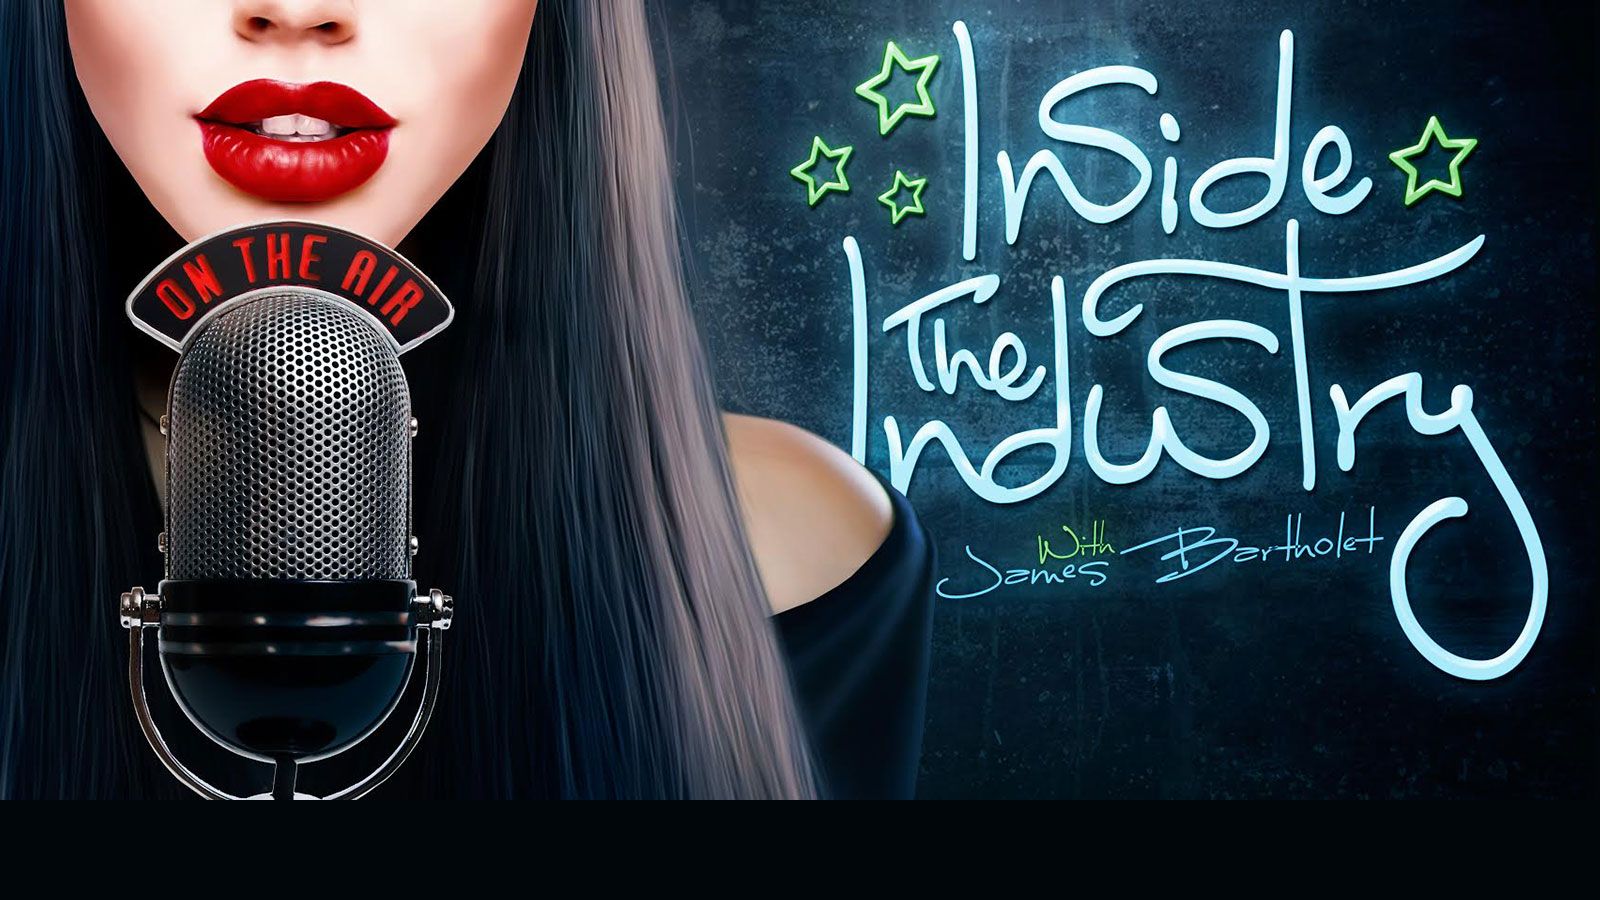 Riley Steele, Nickey Huntsman & Loni Legend On 'Inside' Tonight